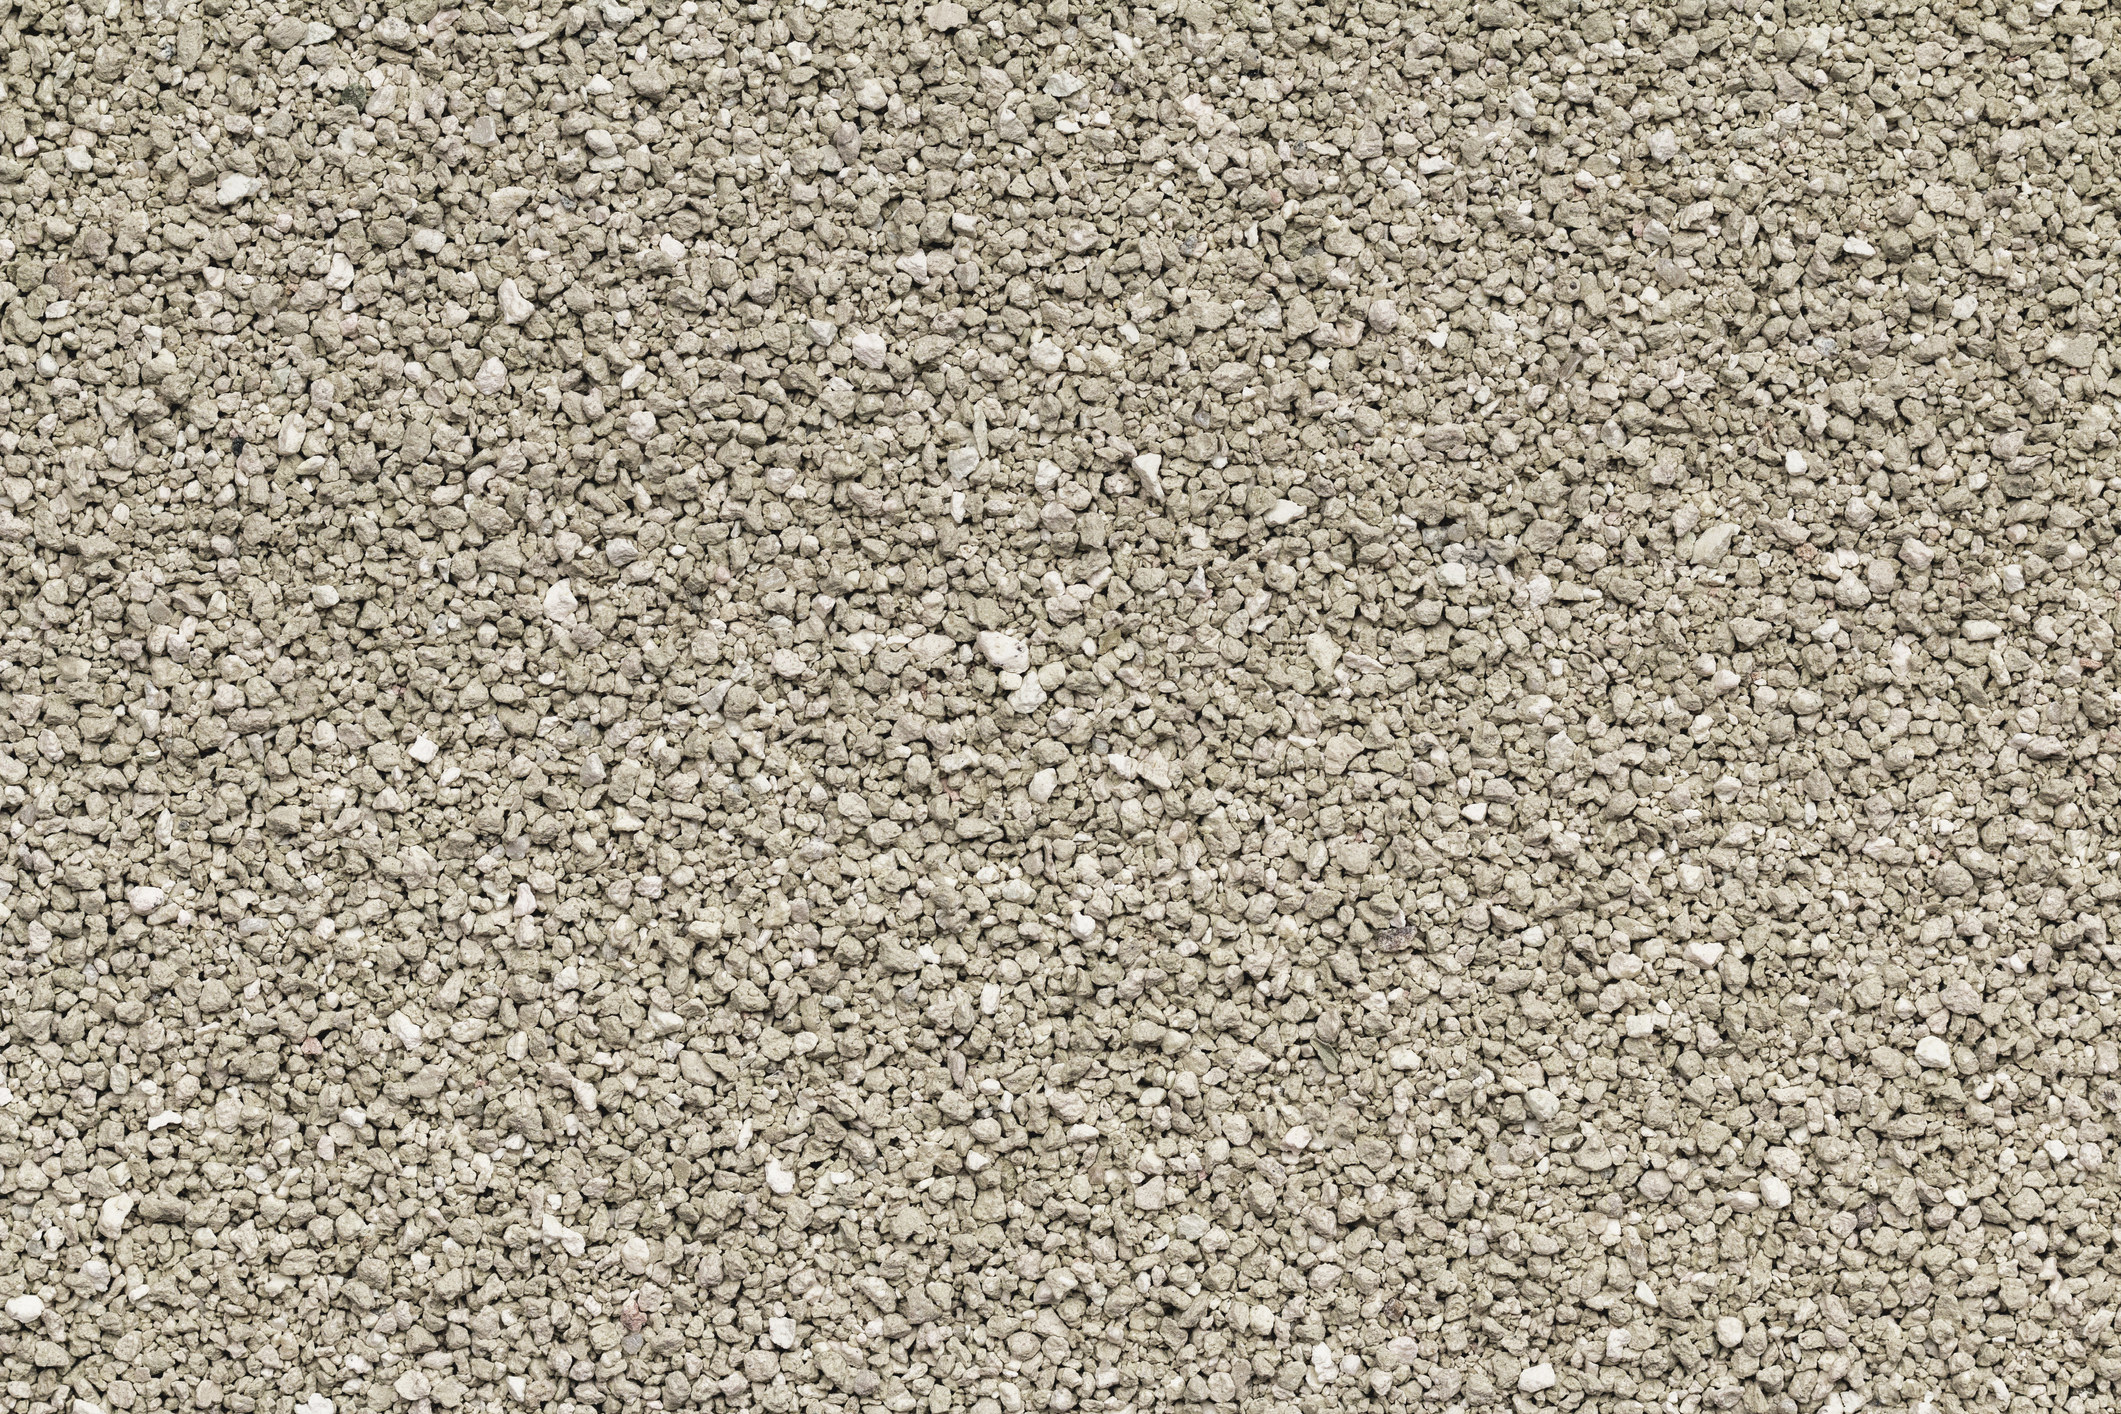 Coarse, gravel-like texture.